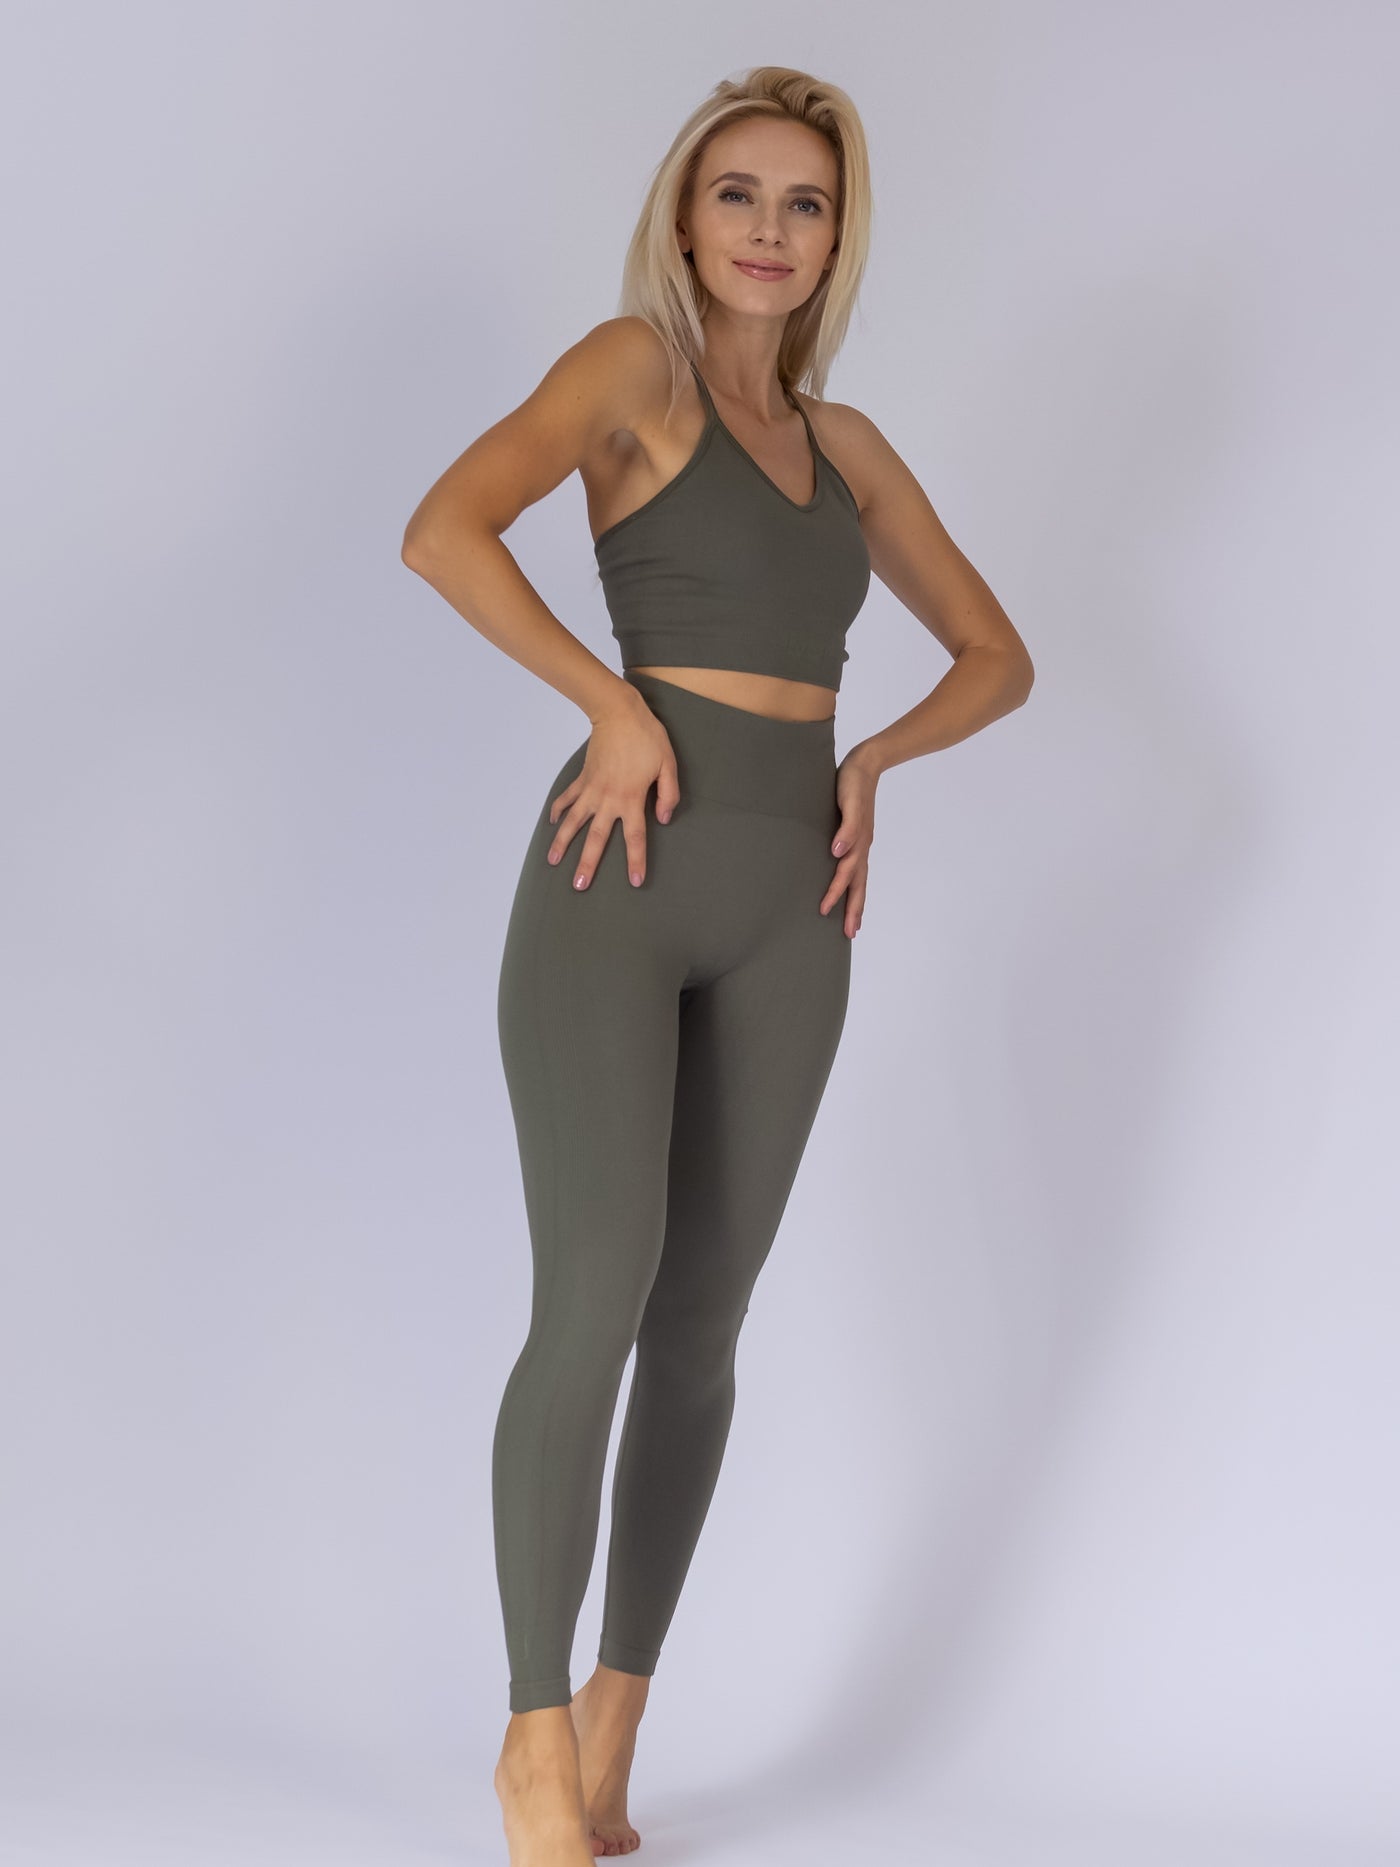 Adventure Seamless Olive Leggings - Shop women's workout apparel online | Leggings, hoodies, Top & bras | bejactive